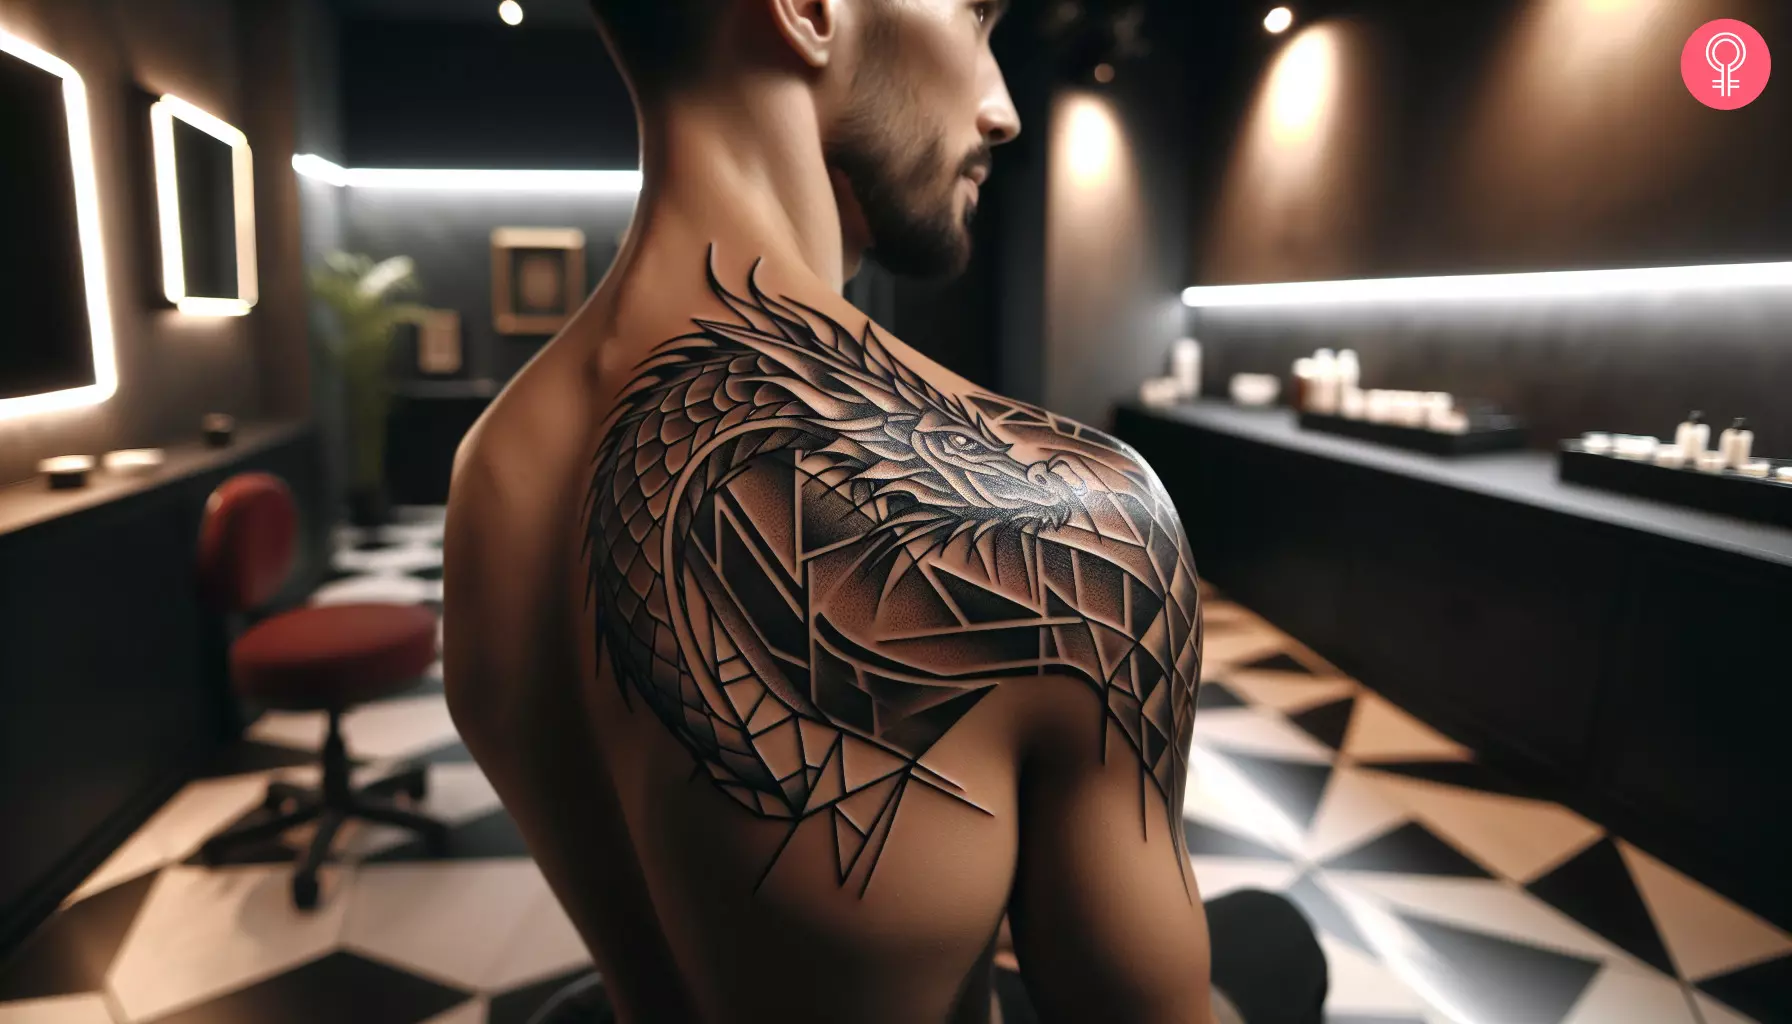 A geometric dragon tattoo on the shoulder of a man